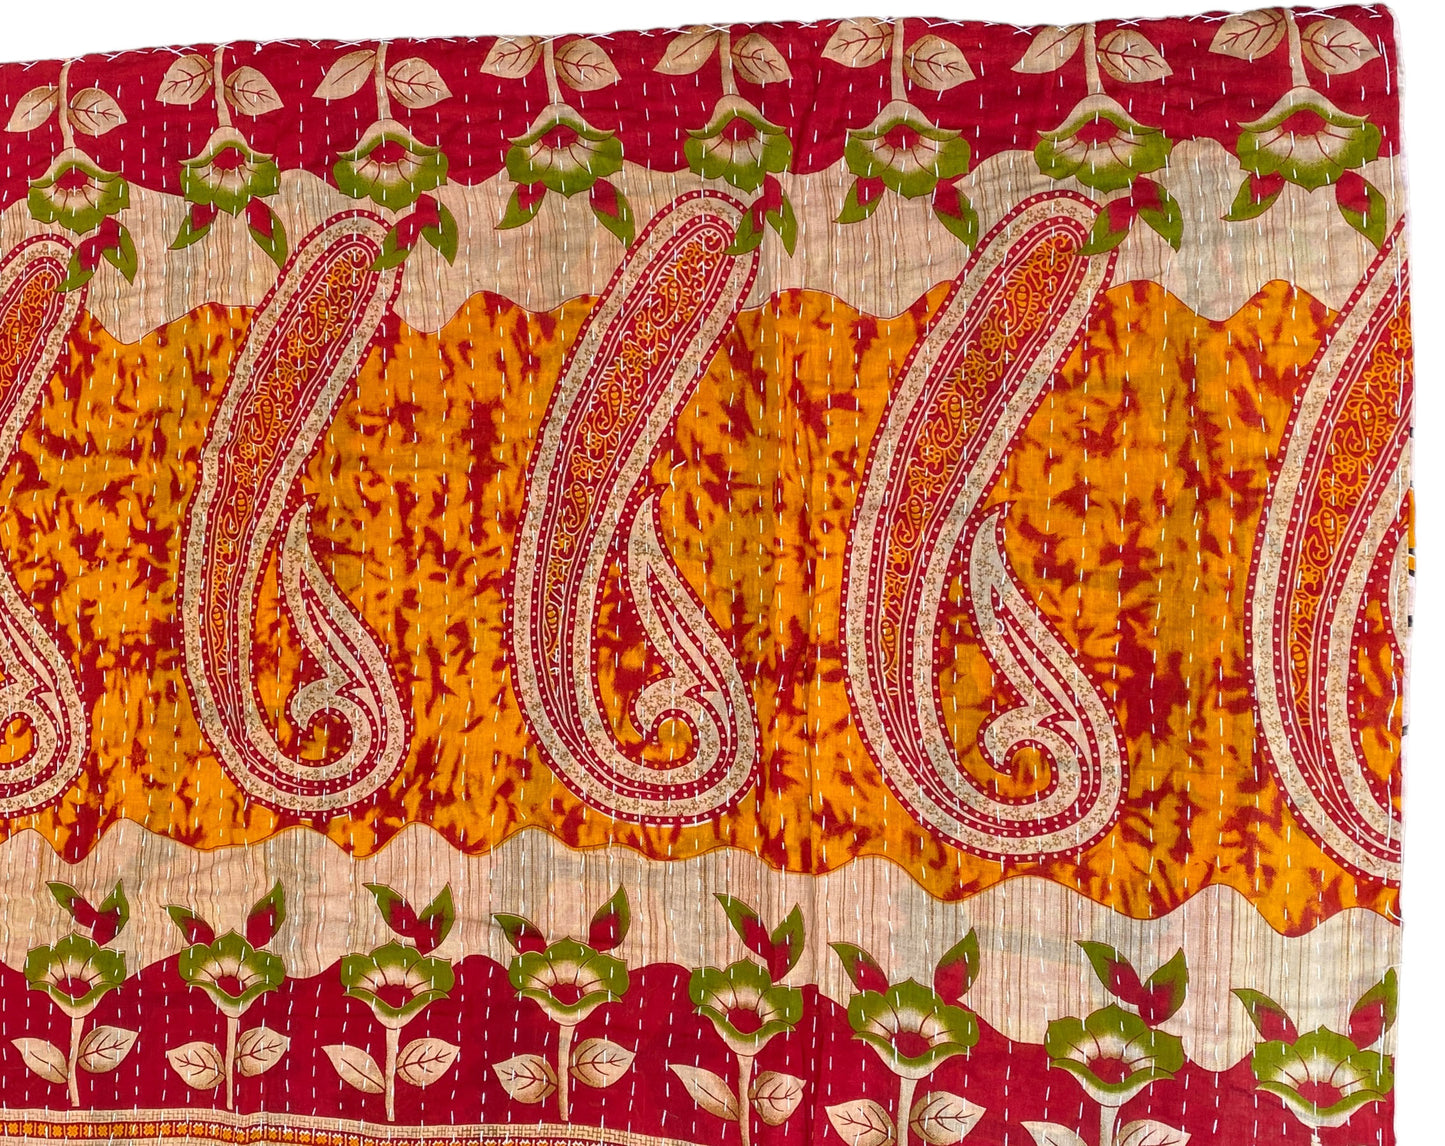 #5258 Vintage Indian CottonThrow Kantha Quilt 86" H